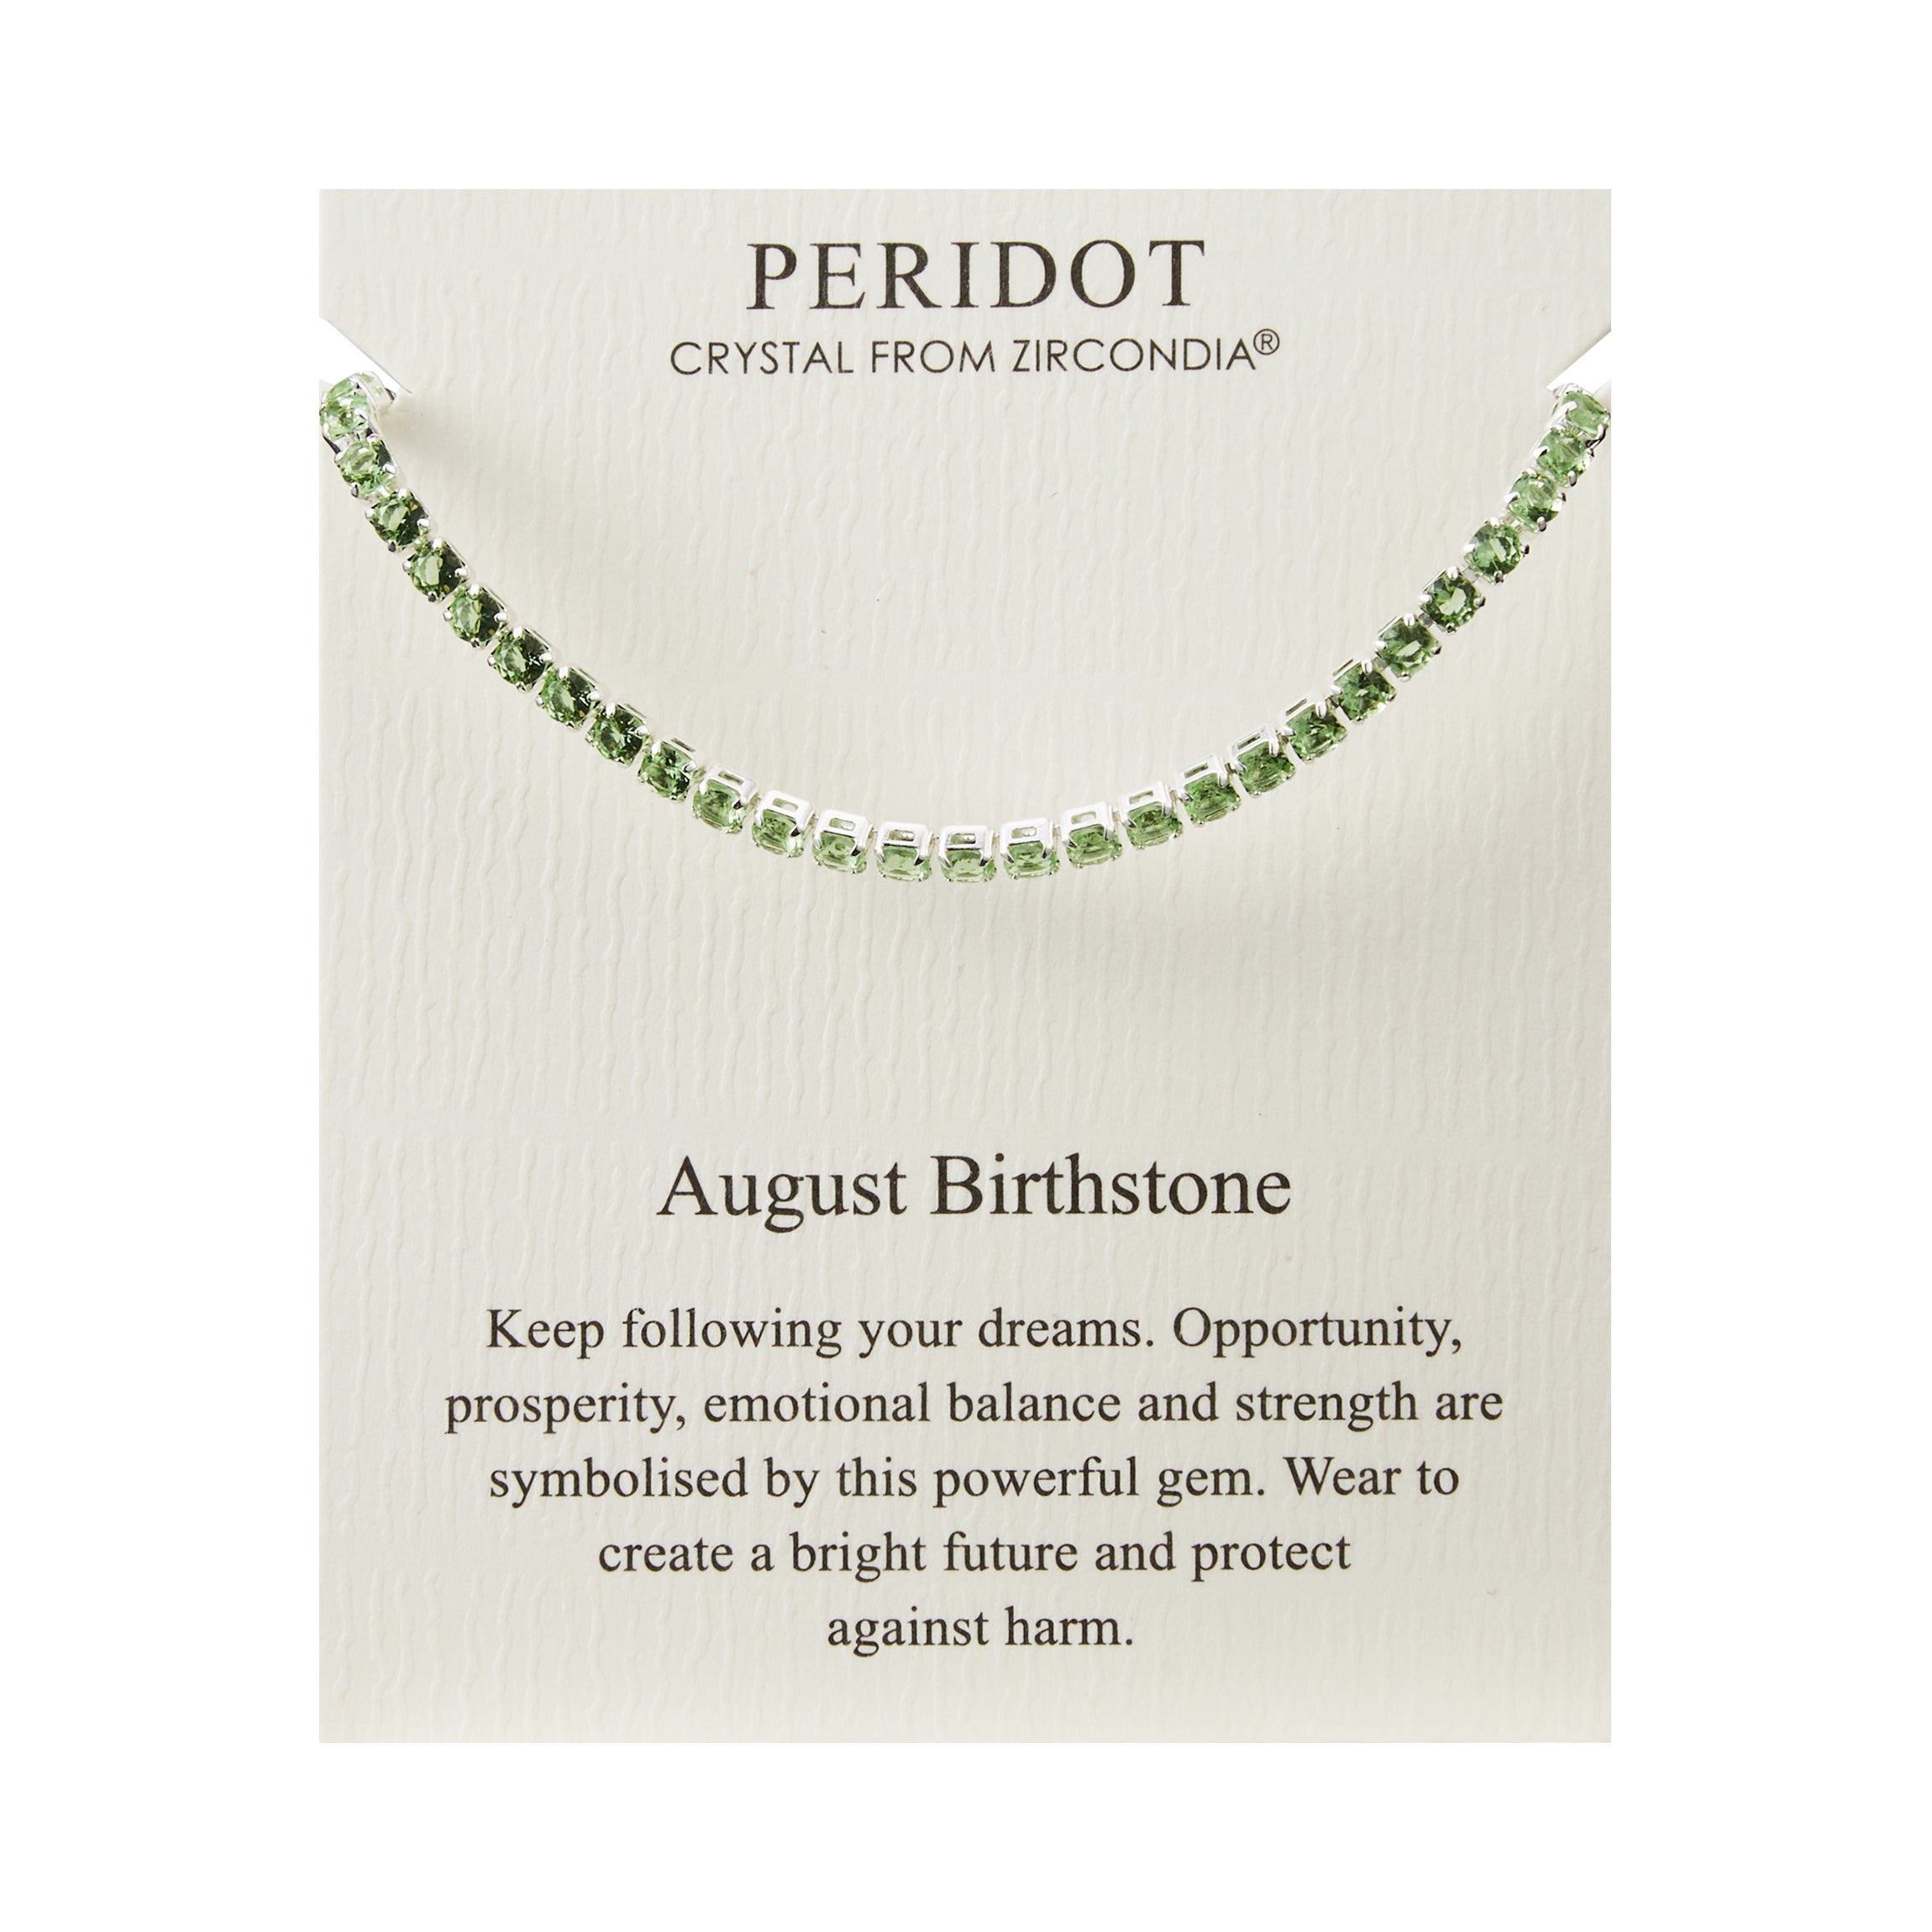 August Birthstone Friendship Bracelet with Peridot Zircondia® Crystals